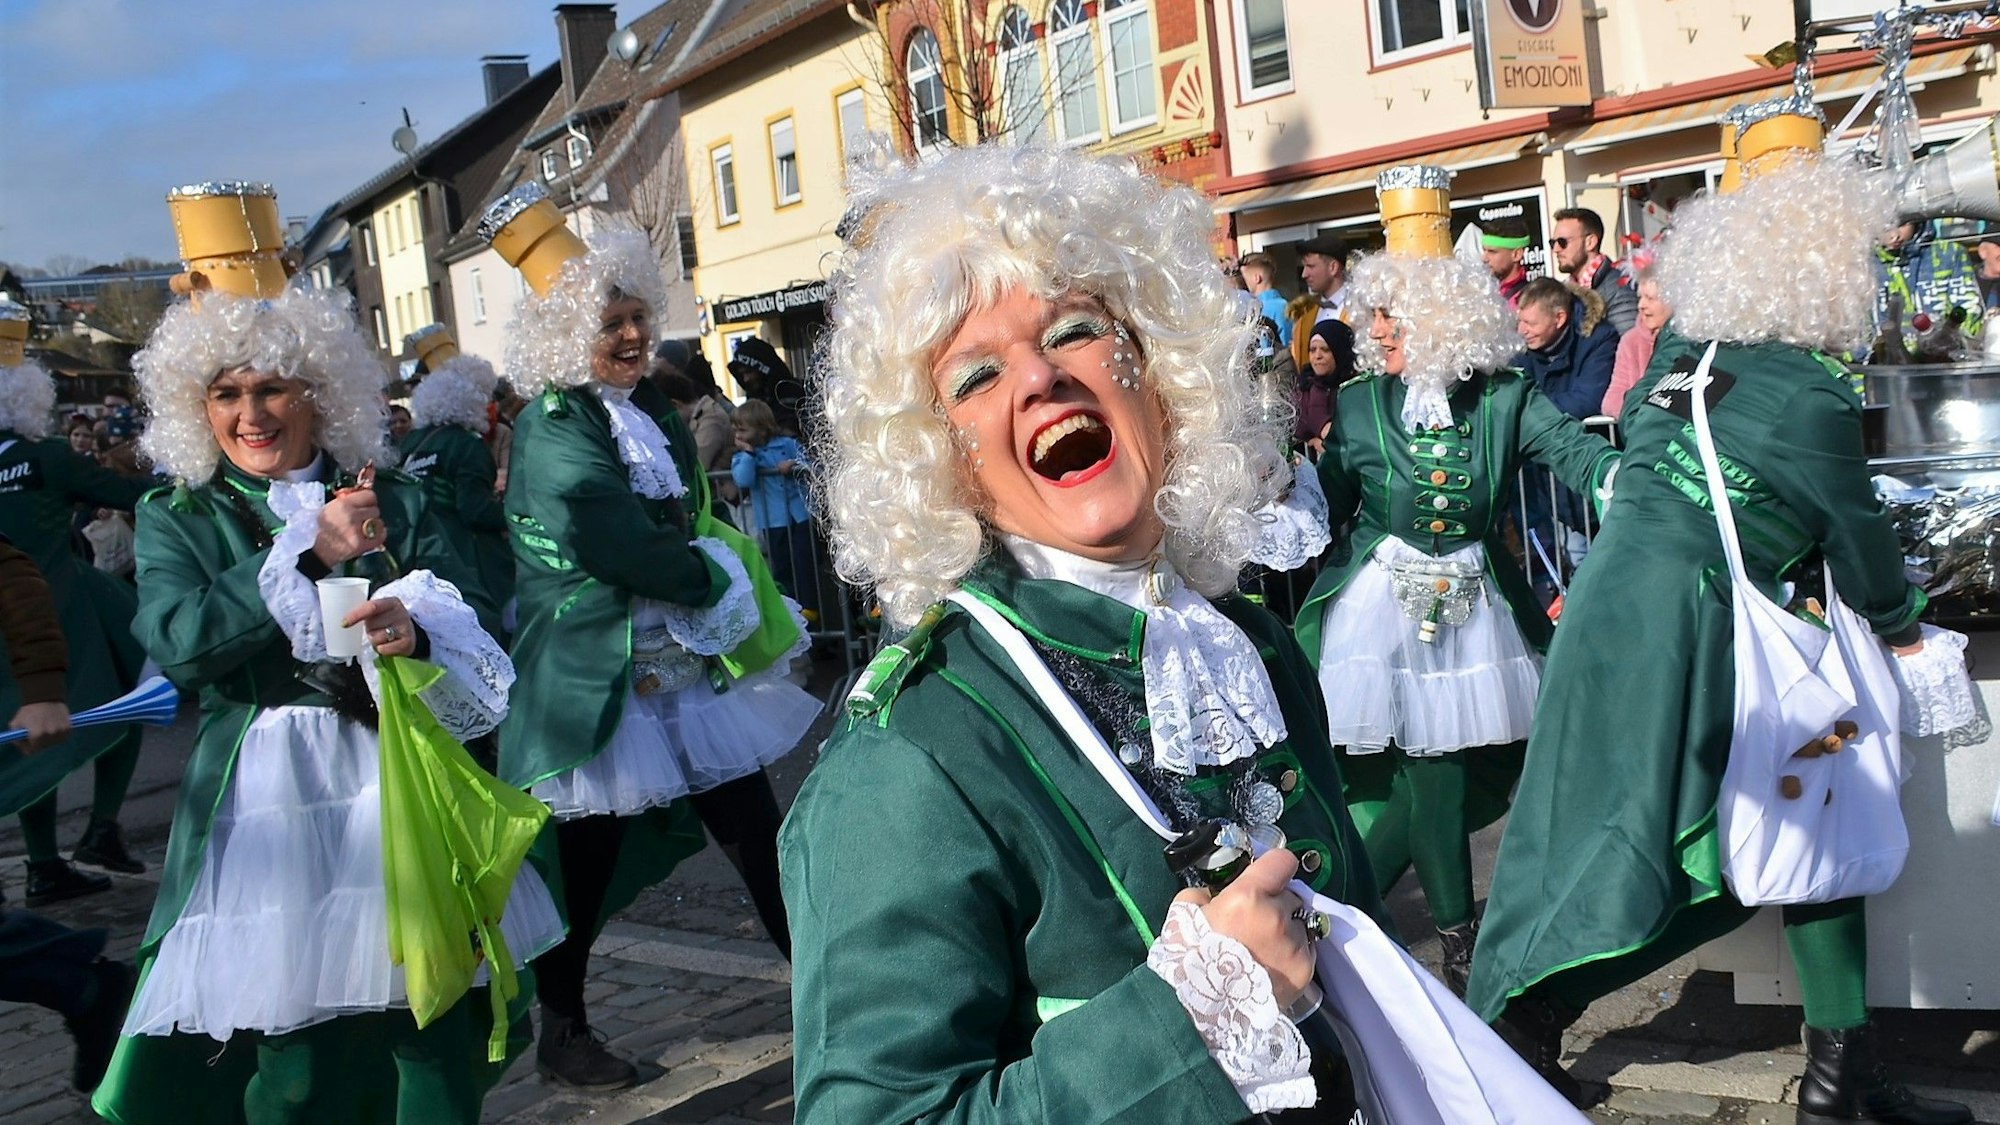 Kostümierte Damen lachen im Karnevalszug.